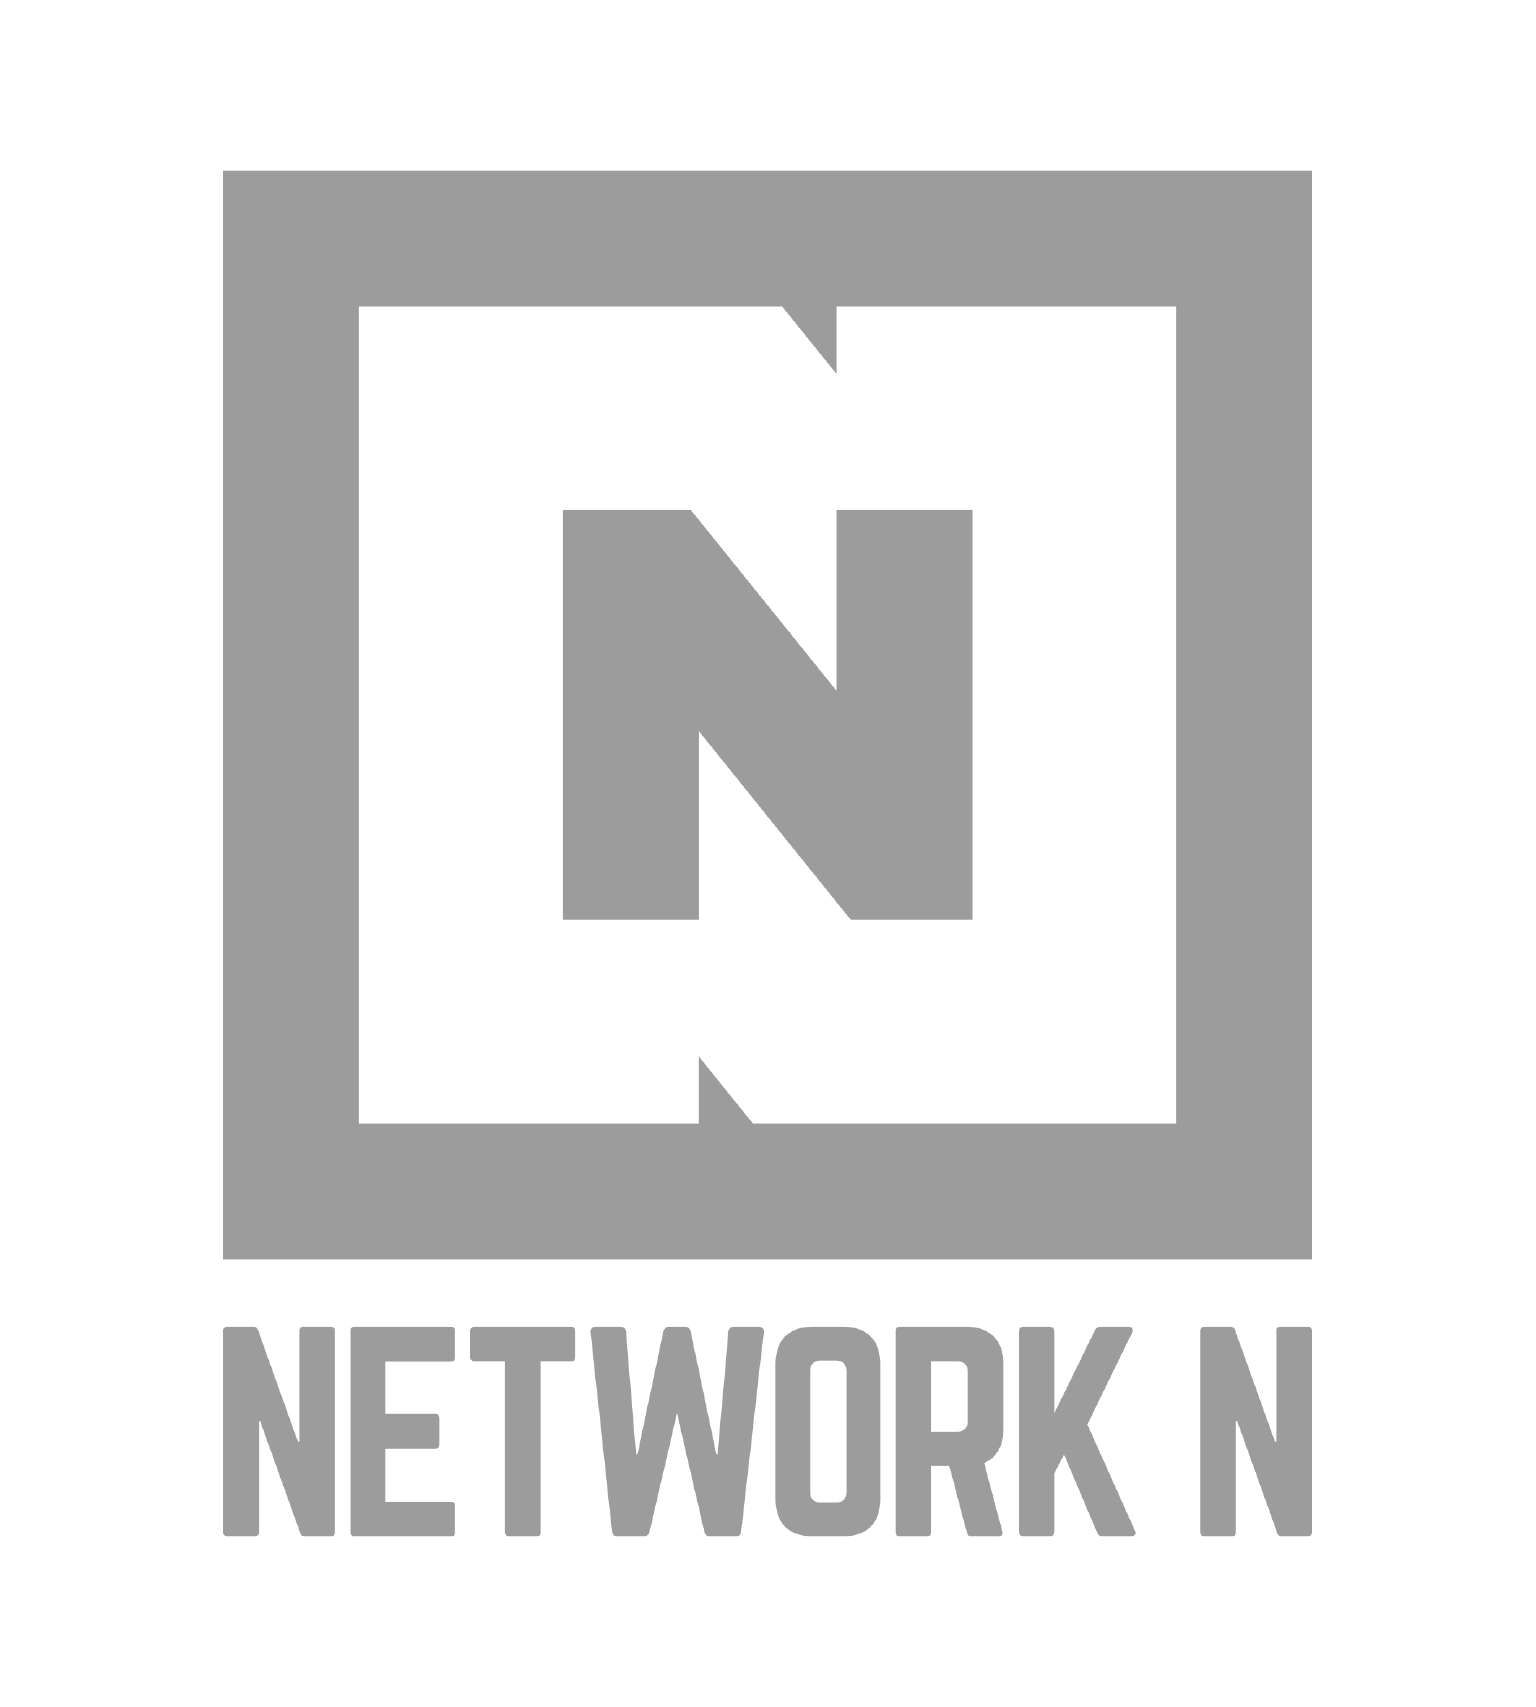 Network N - Crunchbase Company Profile & Funding